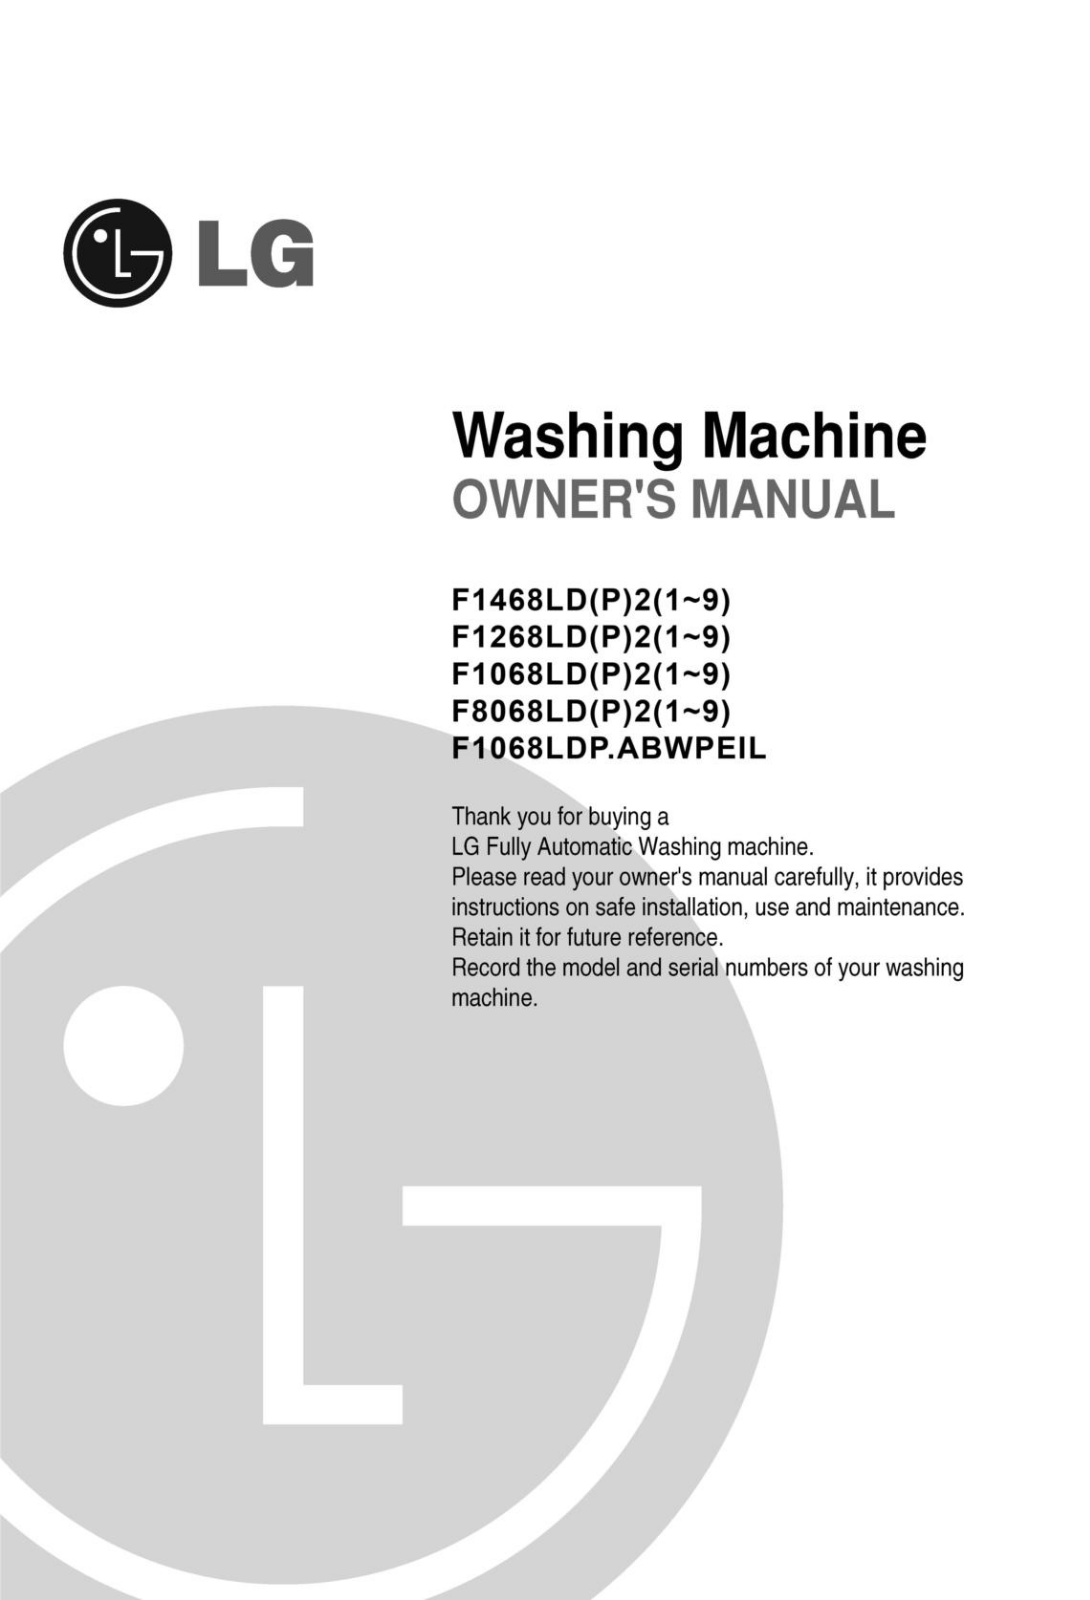 LG F8068NDP, F8068LDP, F1068LDP2 Owner’s Manual